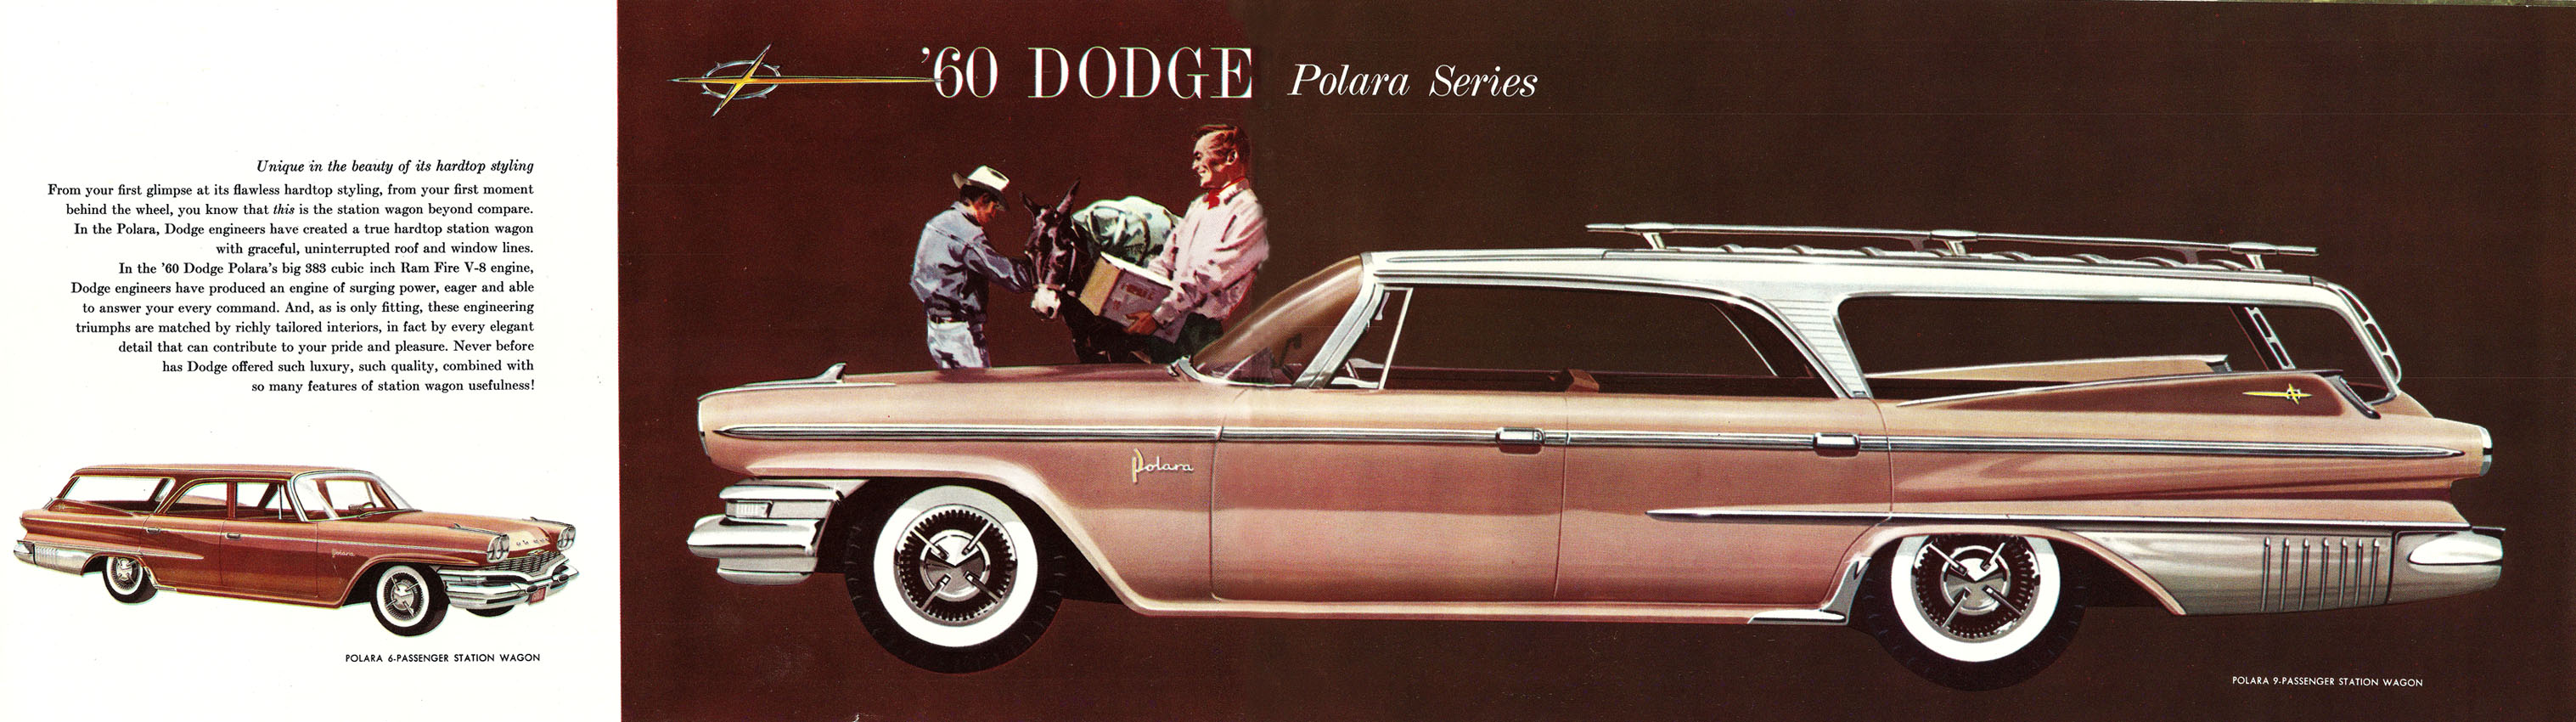 1960_Dodge_Wagons-10